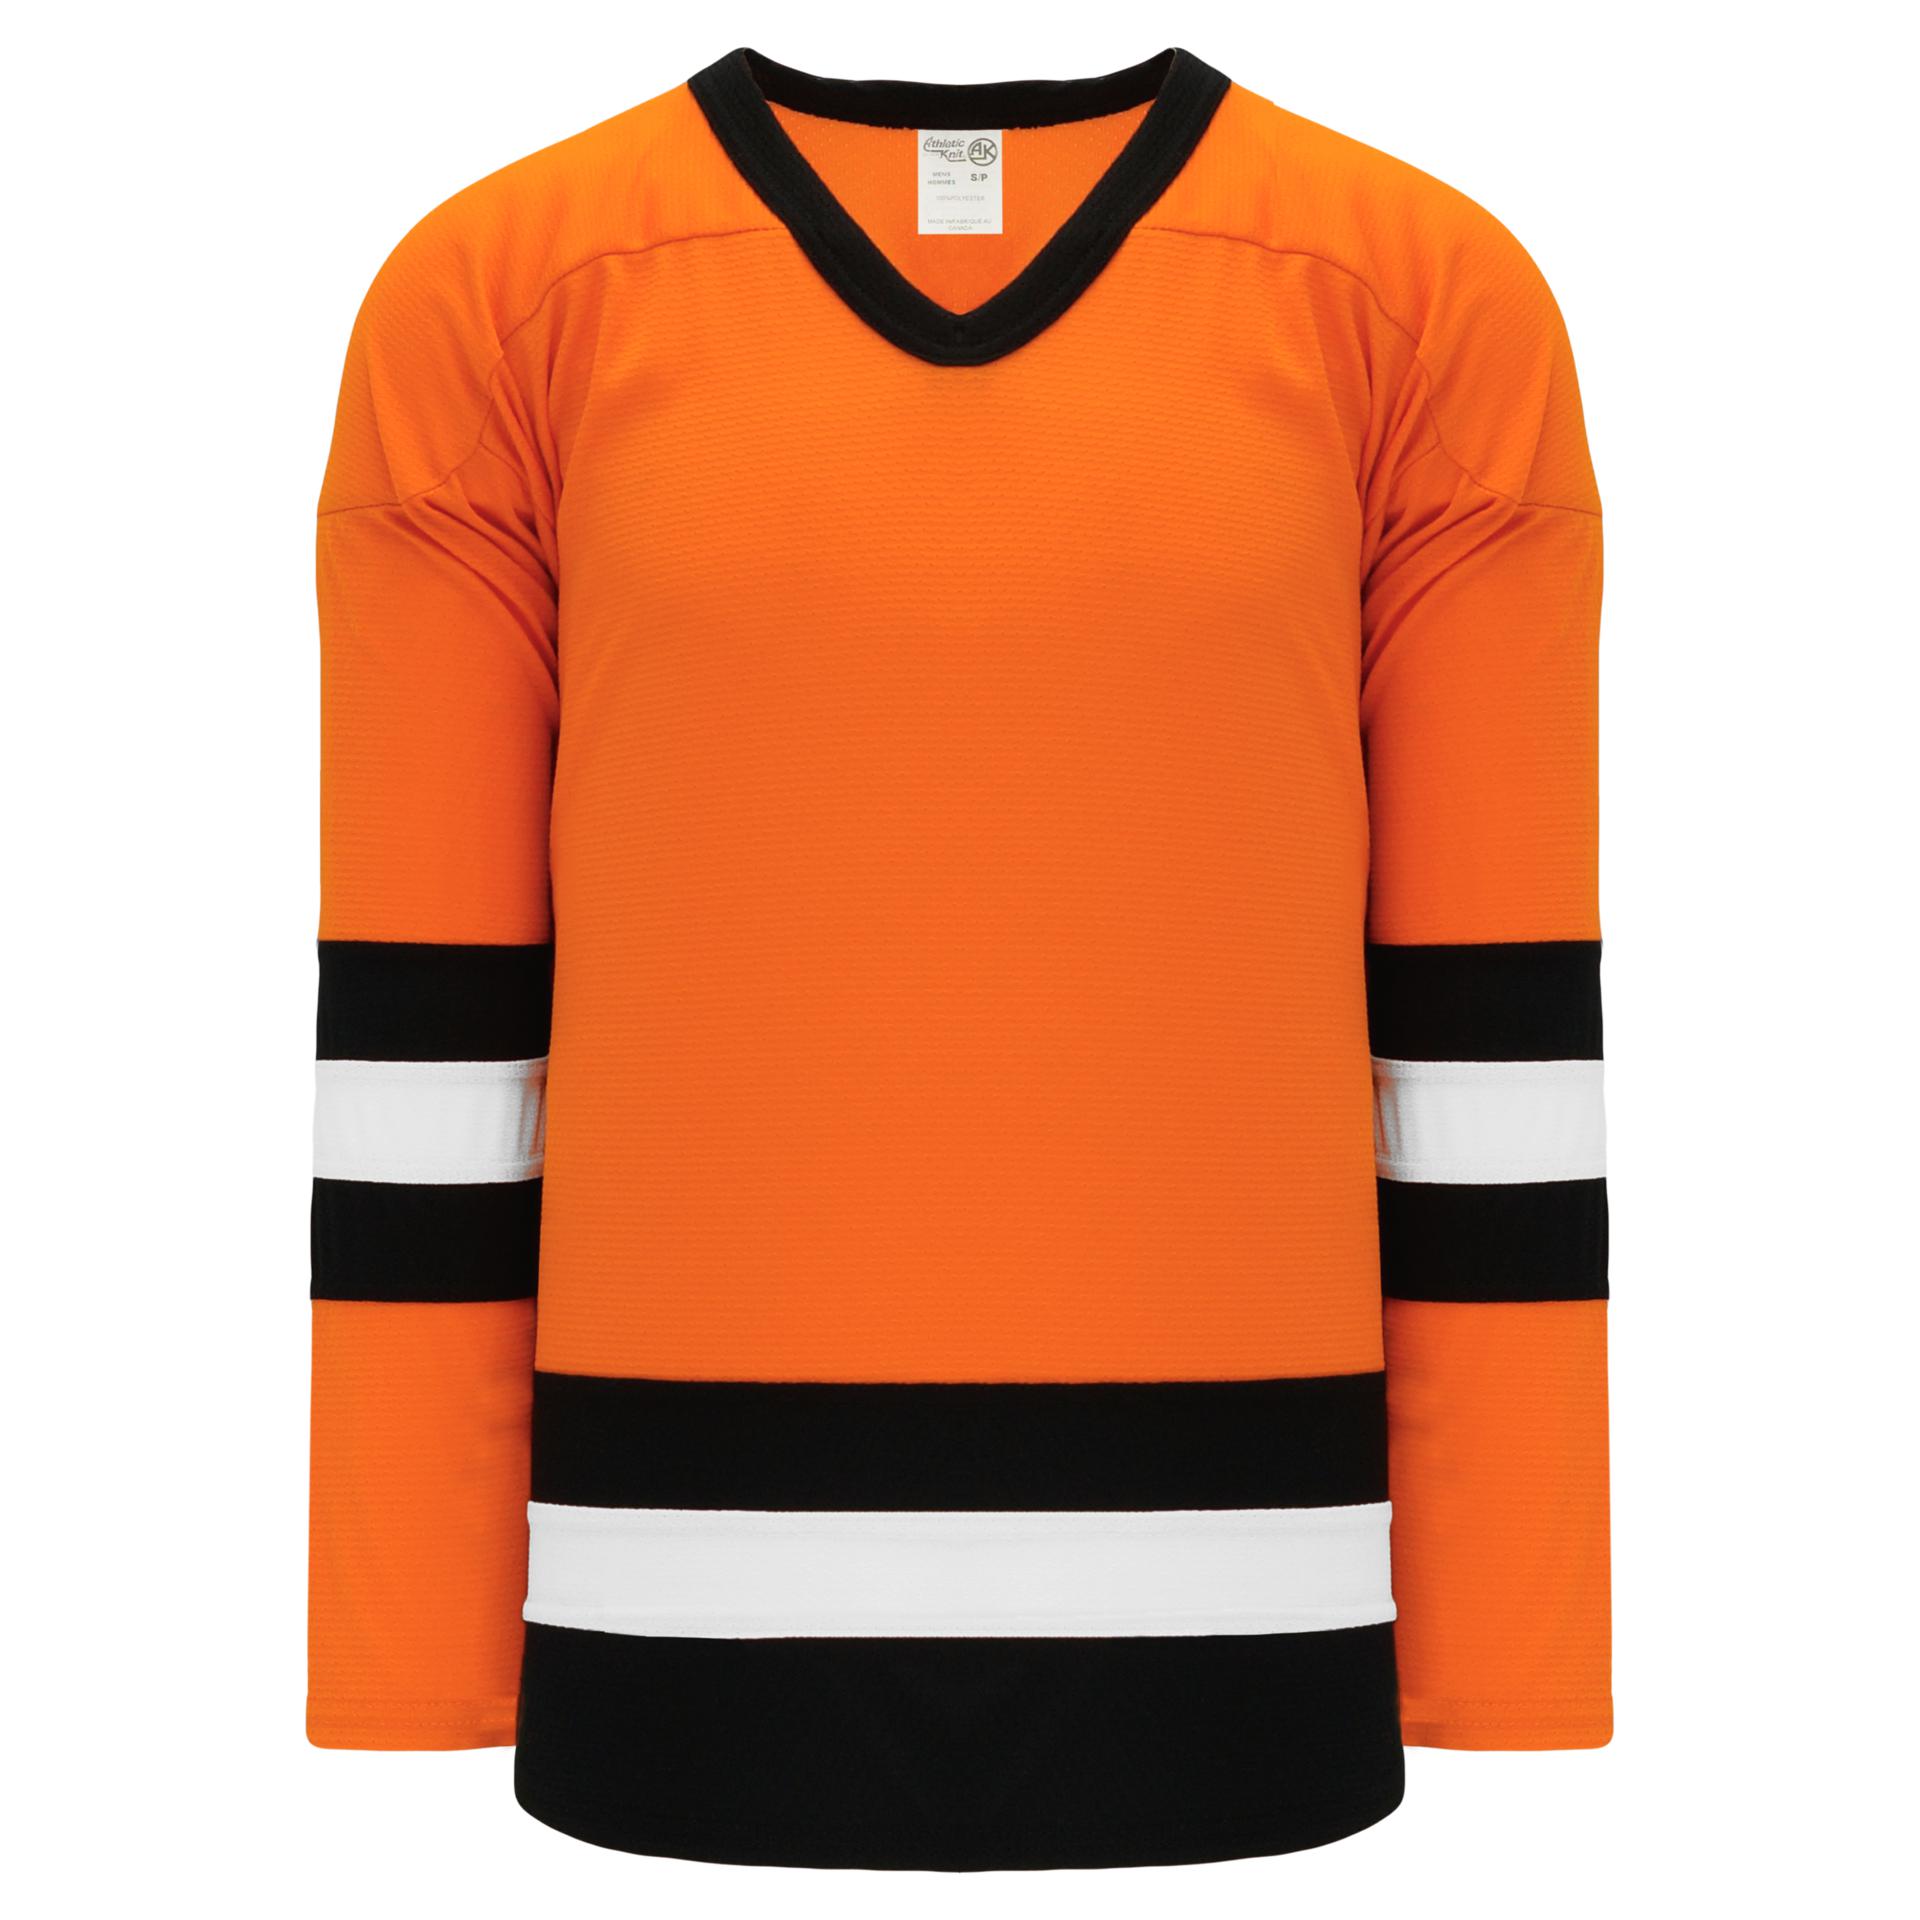 orange and black jerseys